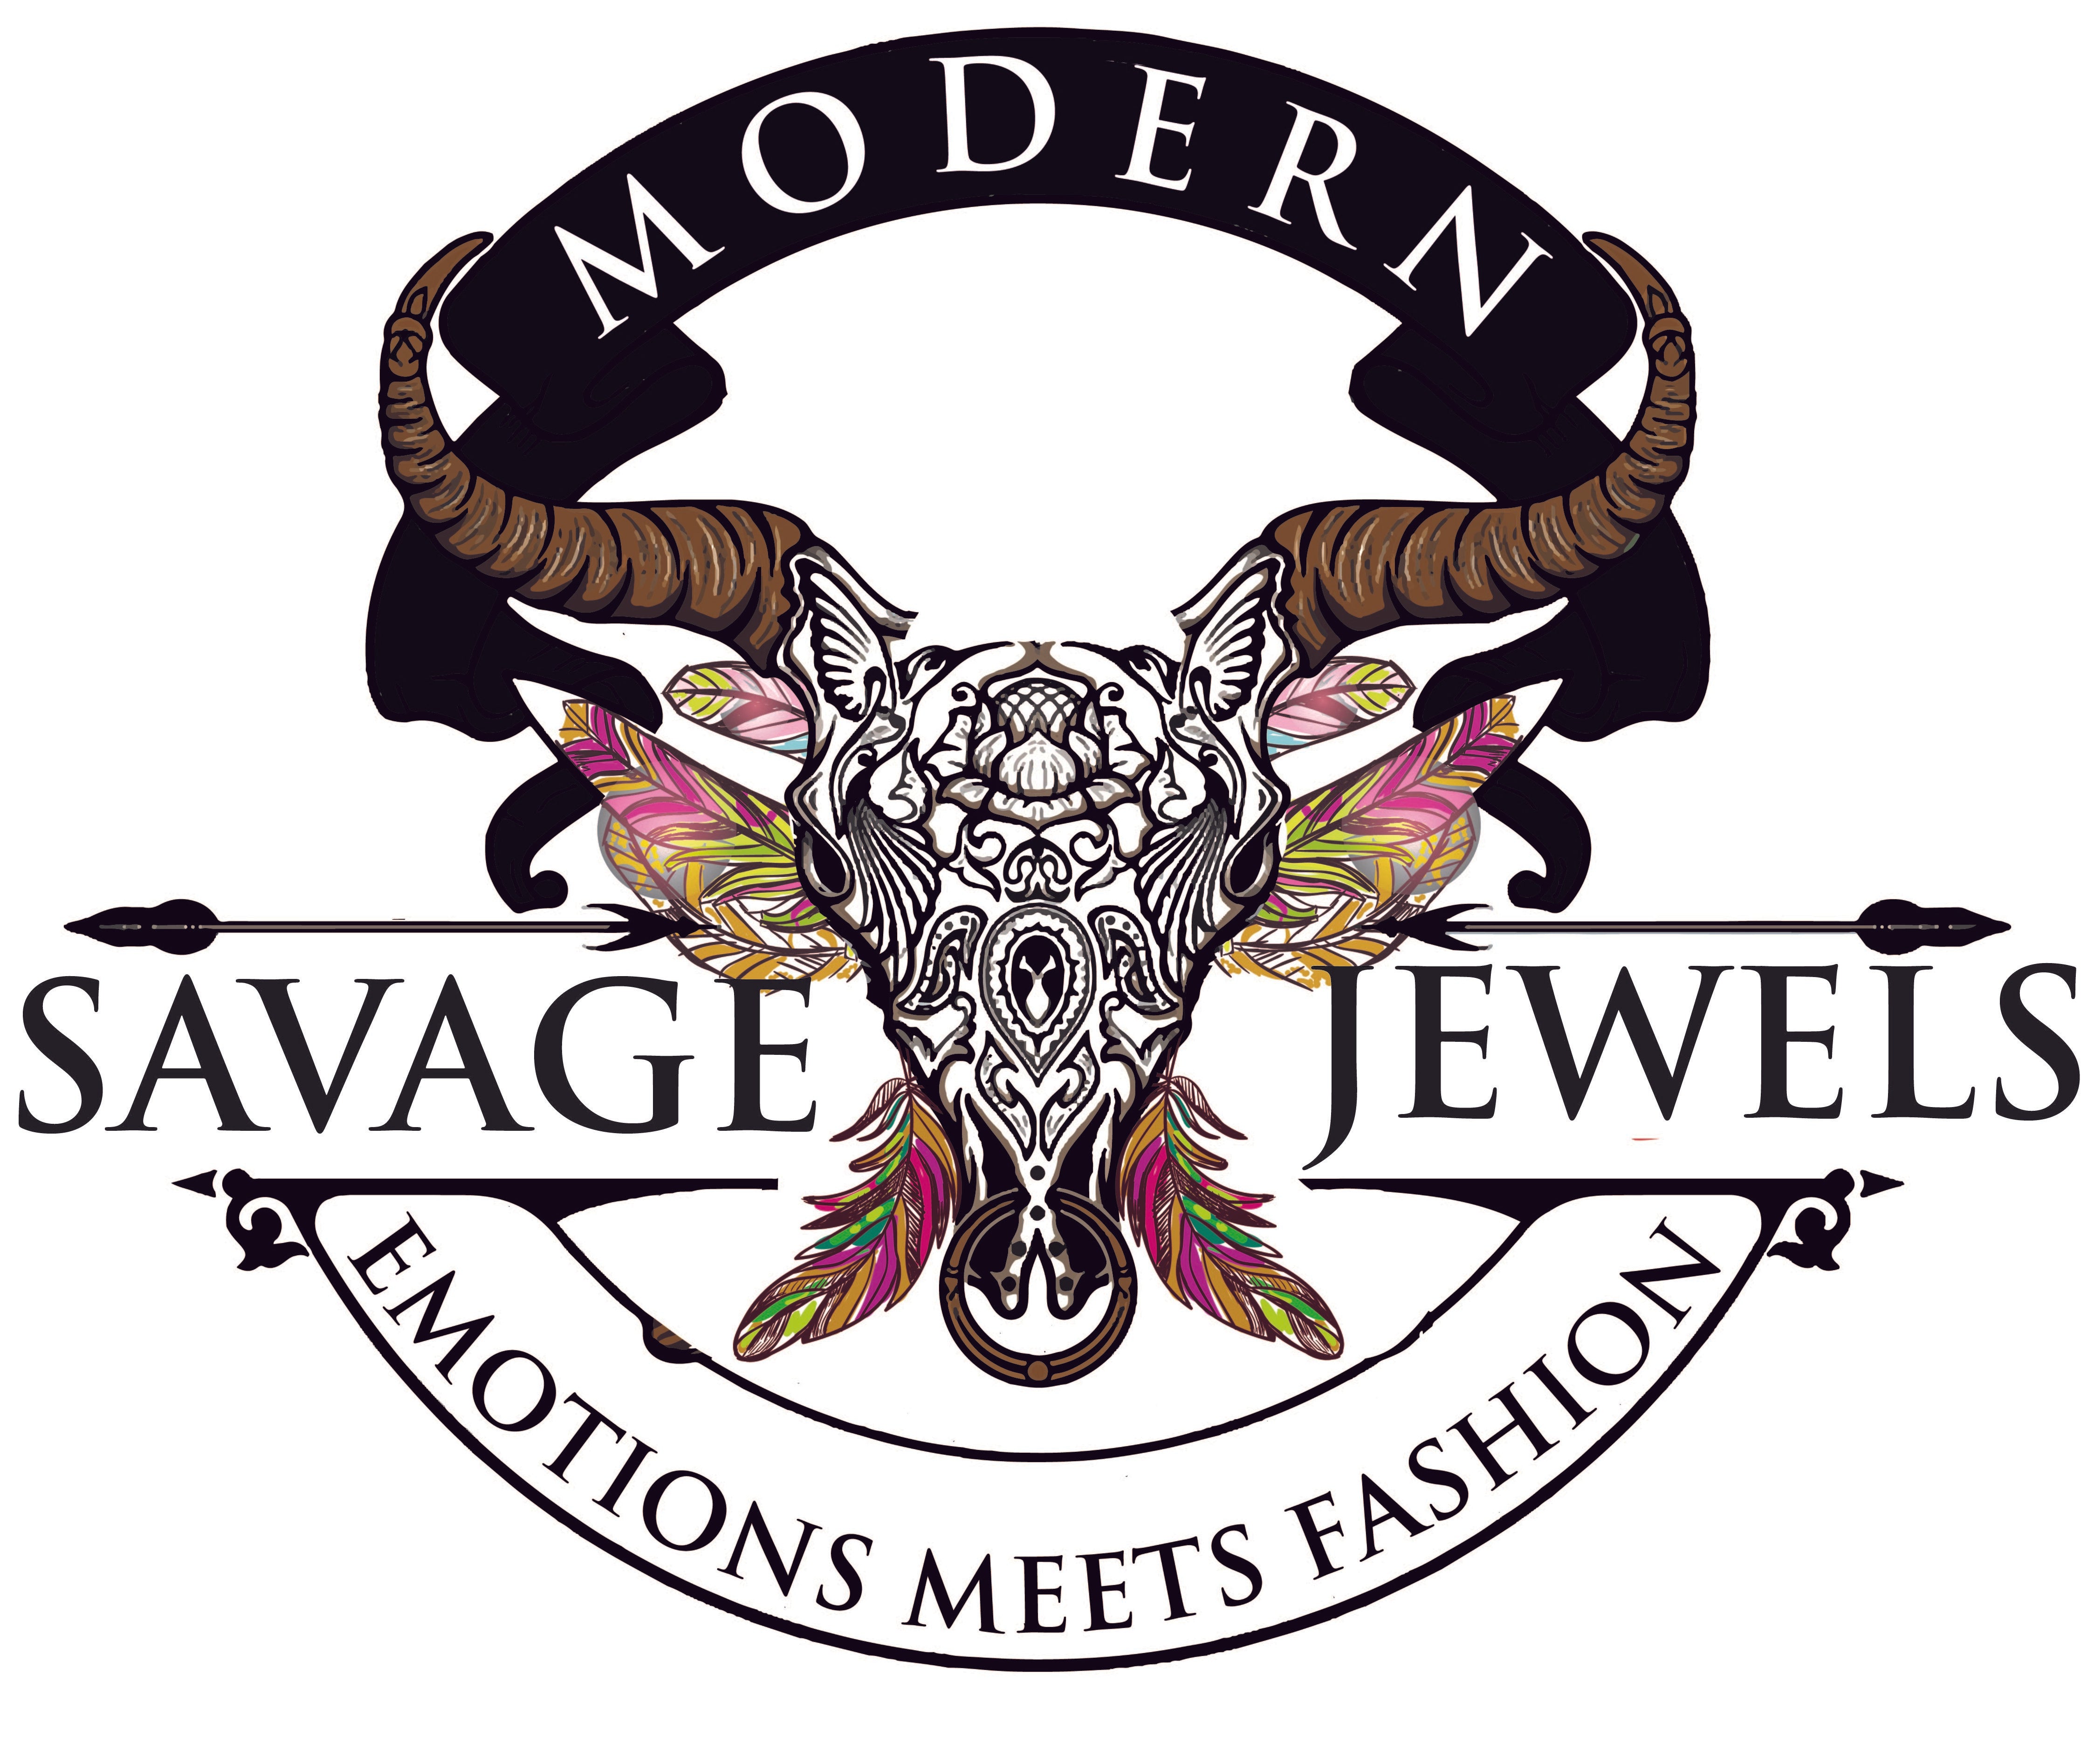 Modern Savage Jewels